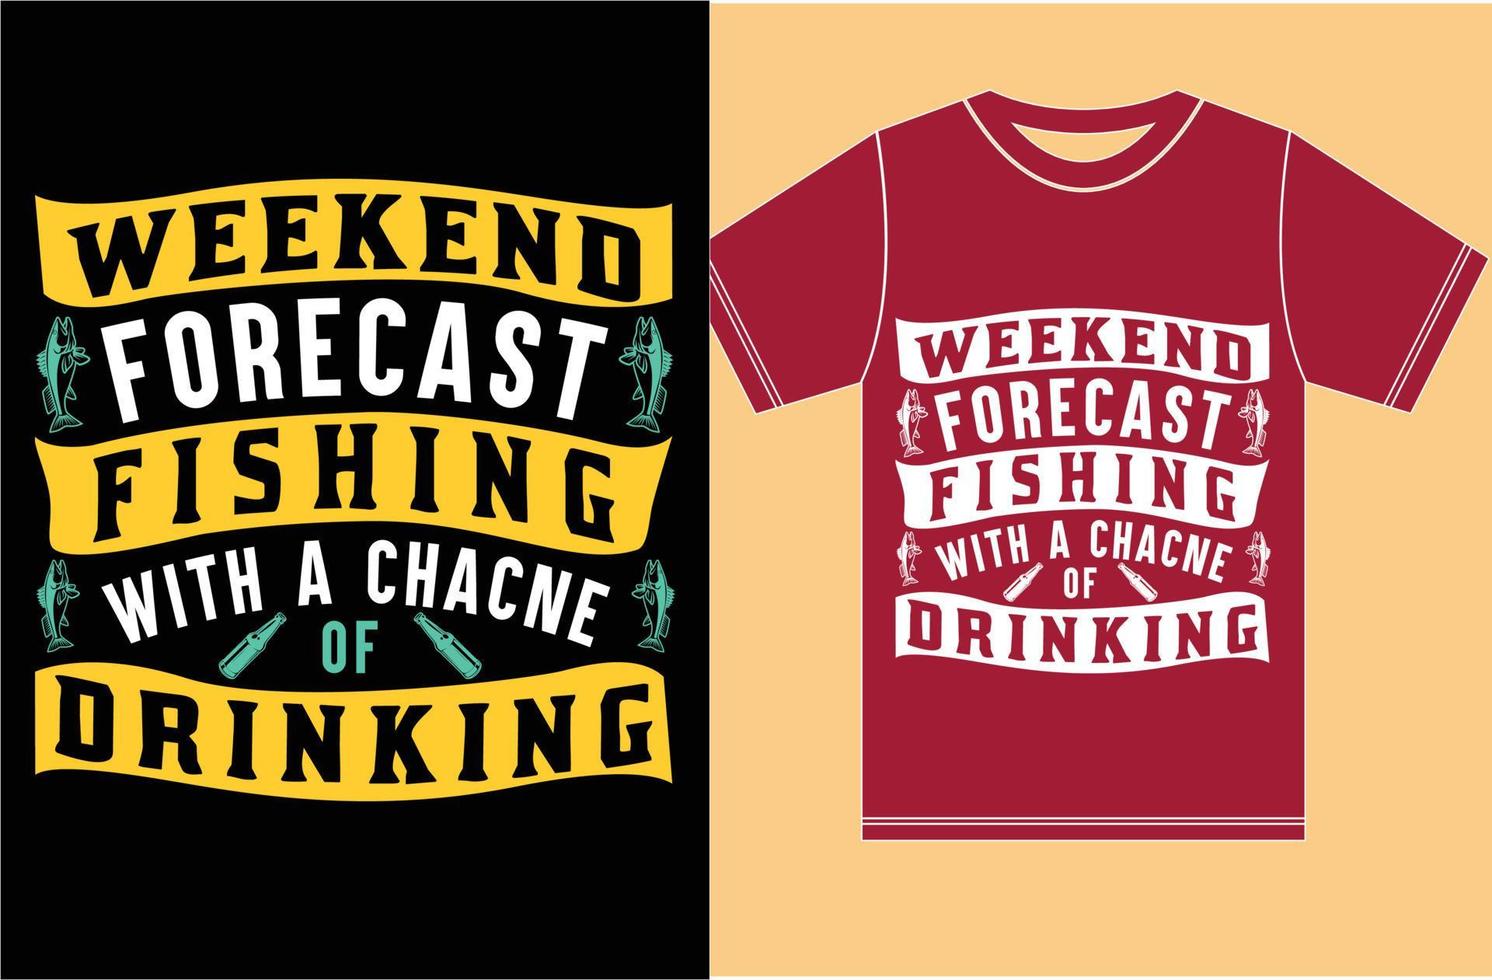 Fishing Lover T shirt Design. vector